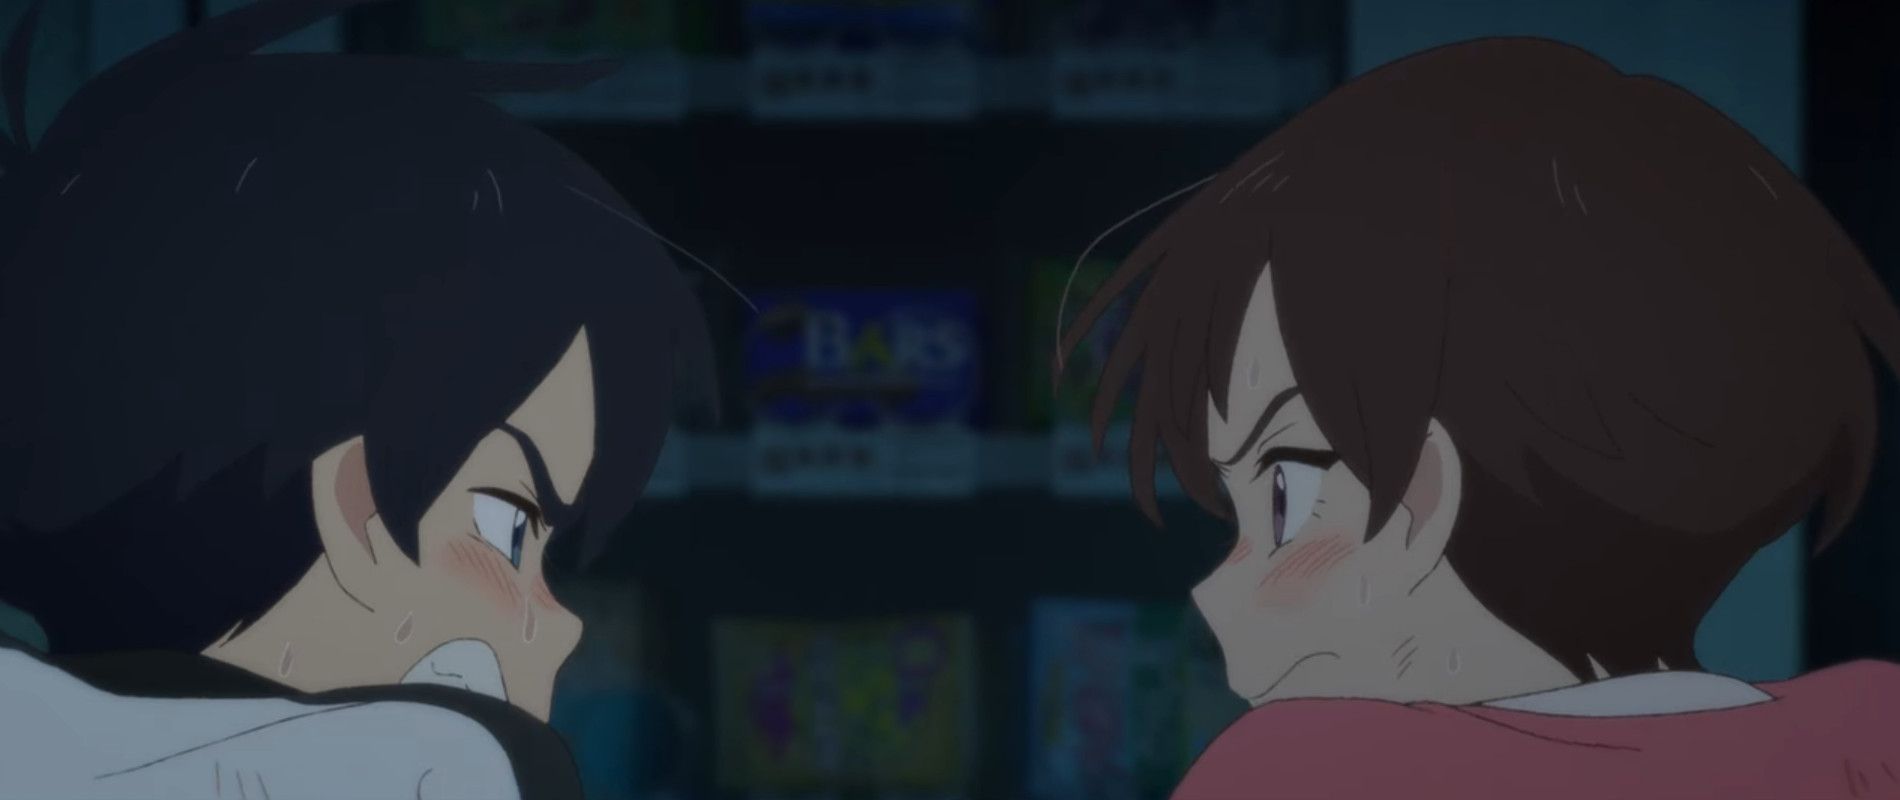 Drifting home Natsume and Kosuke argue